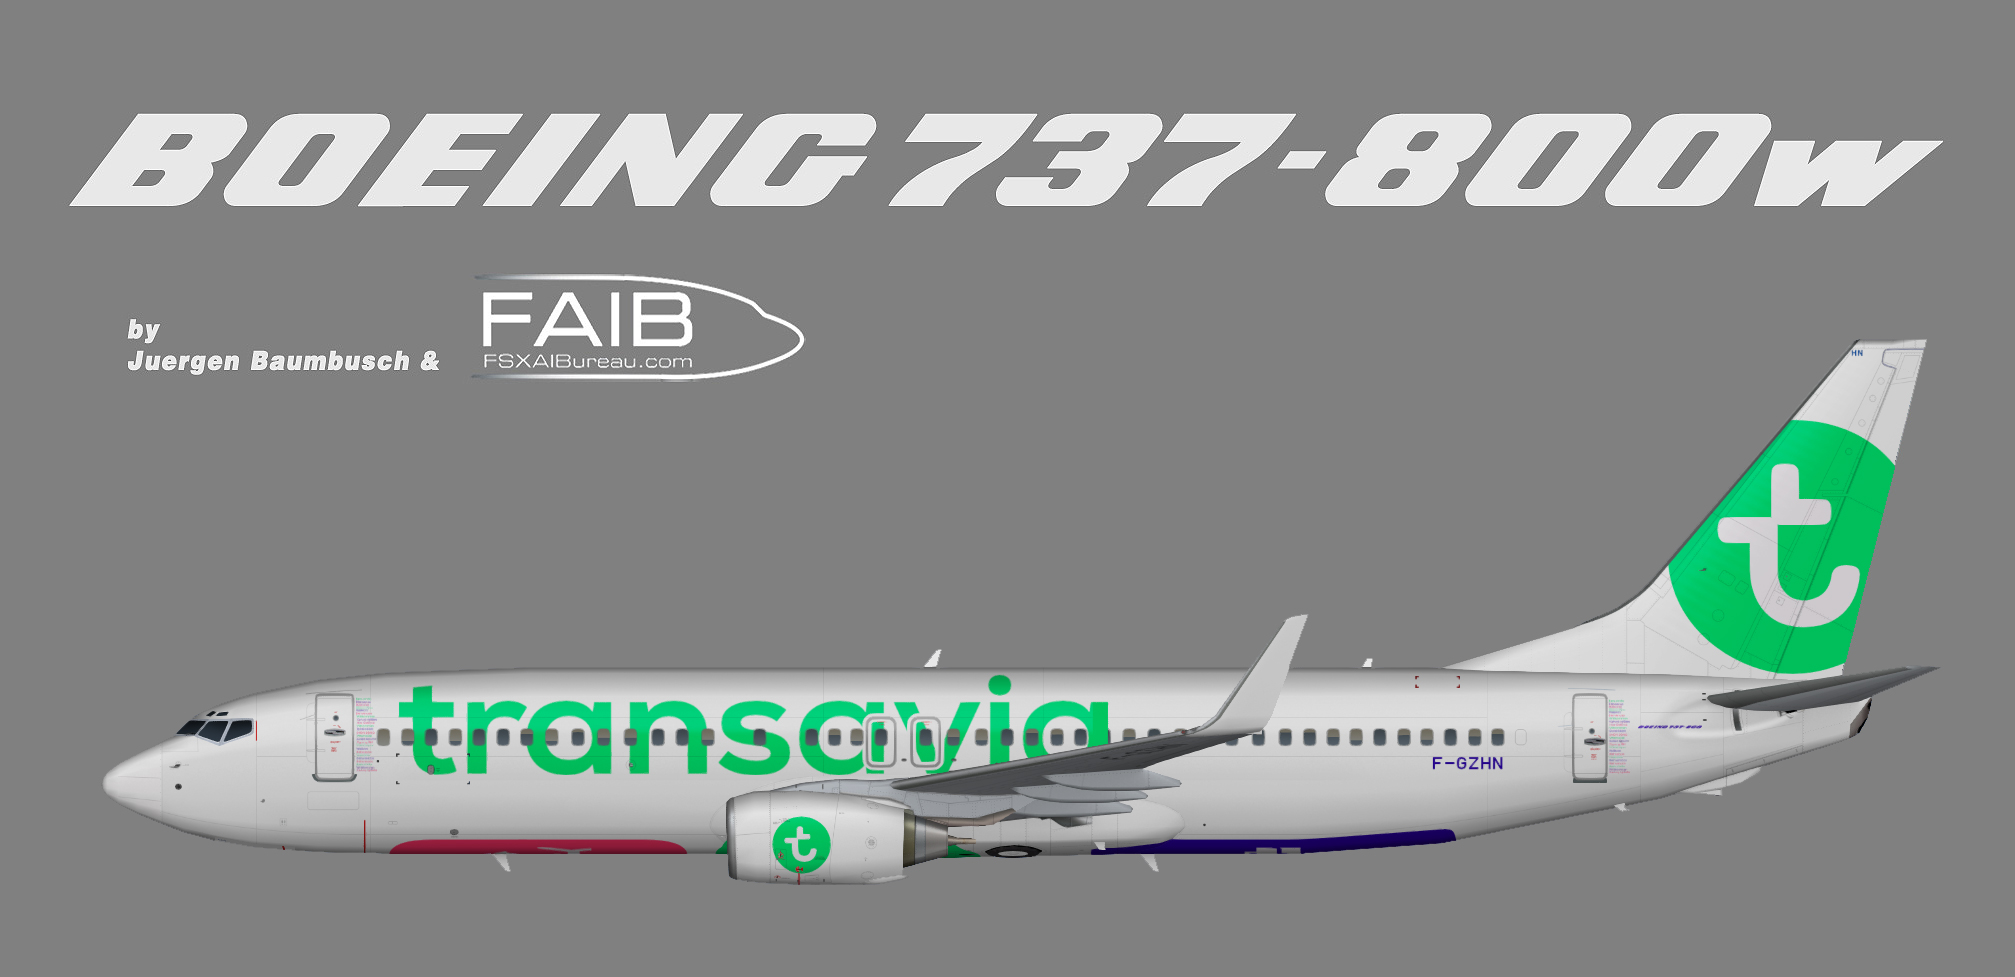 Transavia France Boeing 737-800w